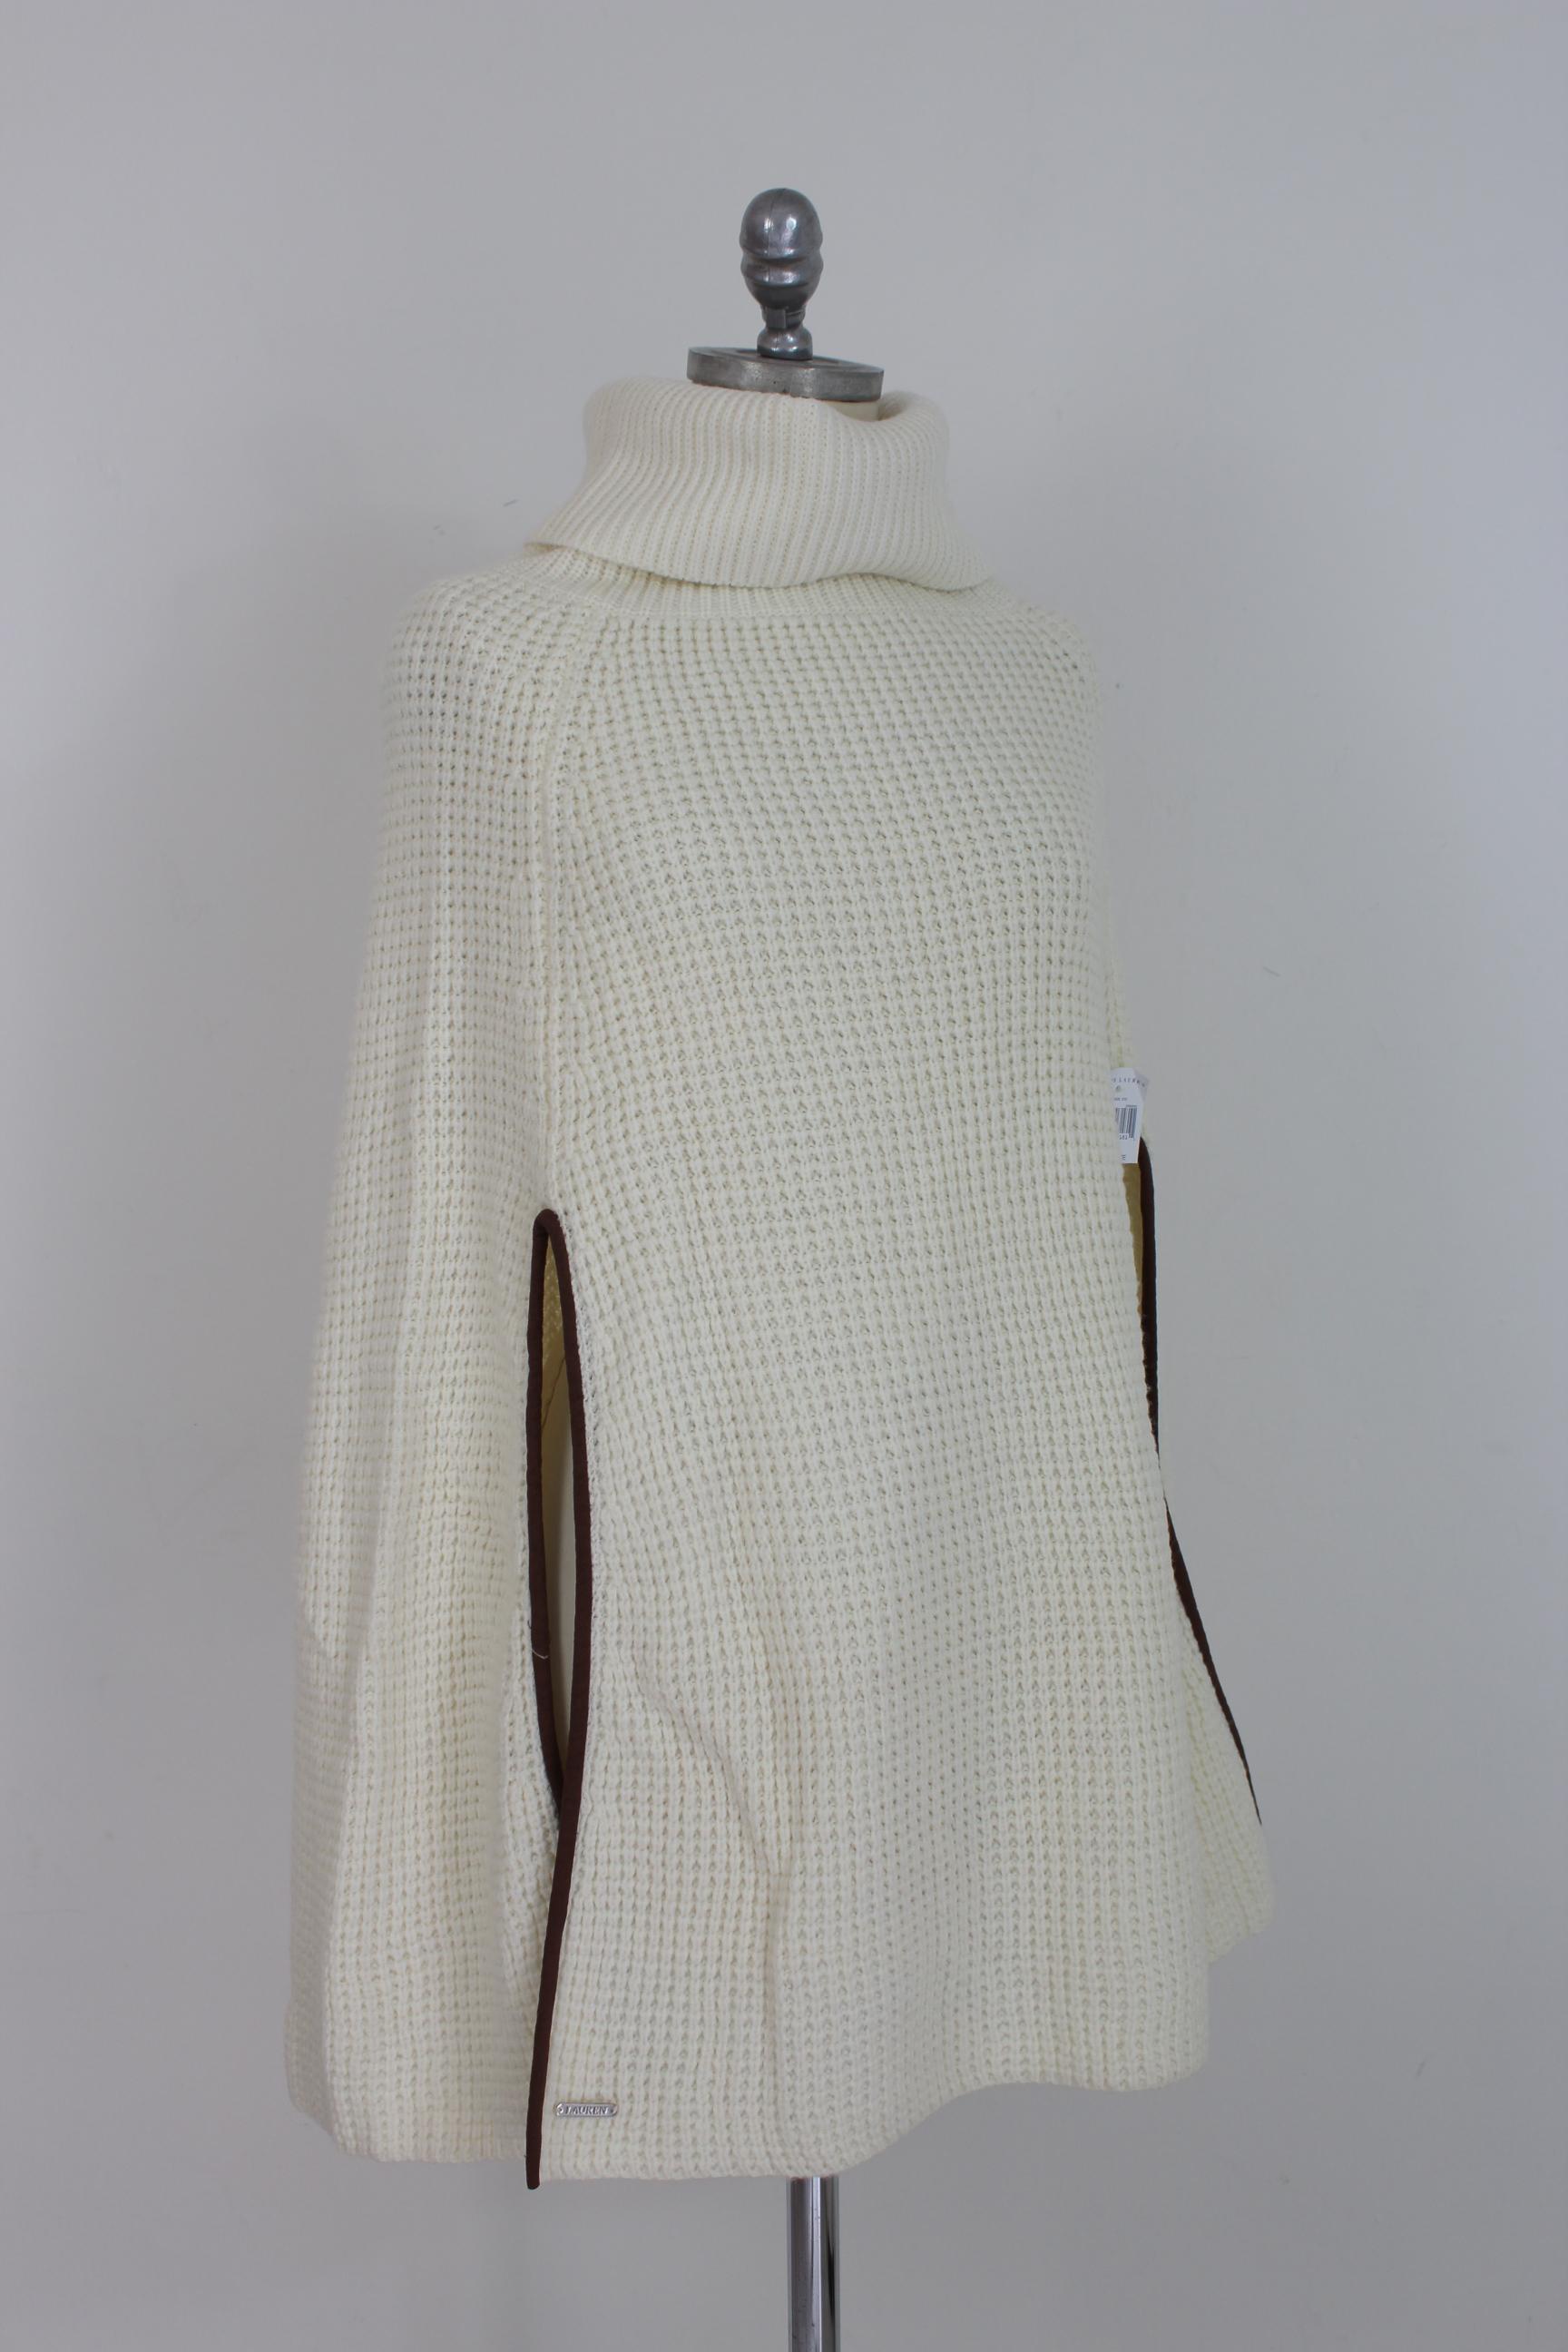 Gray Ralph Lauren White Wool High Collar Sweater Cape Poncho 